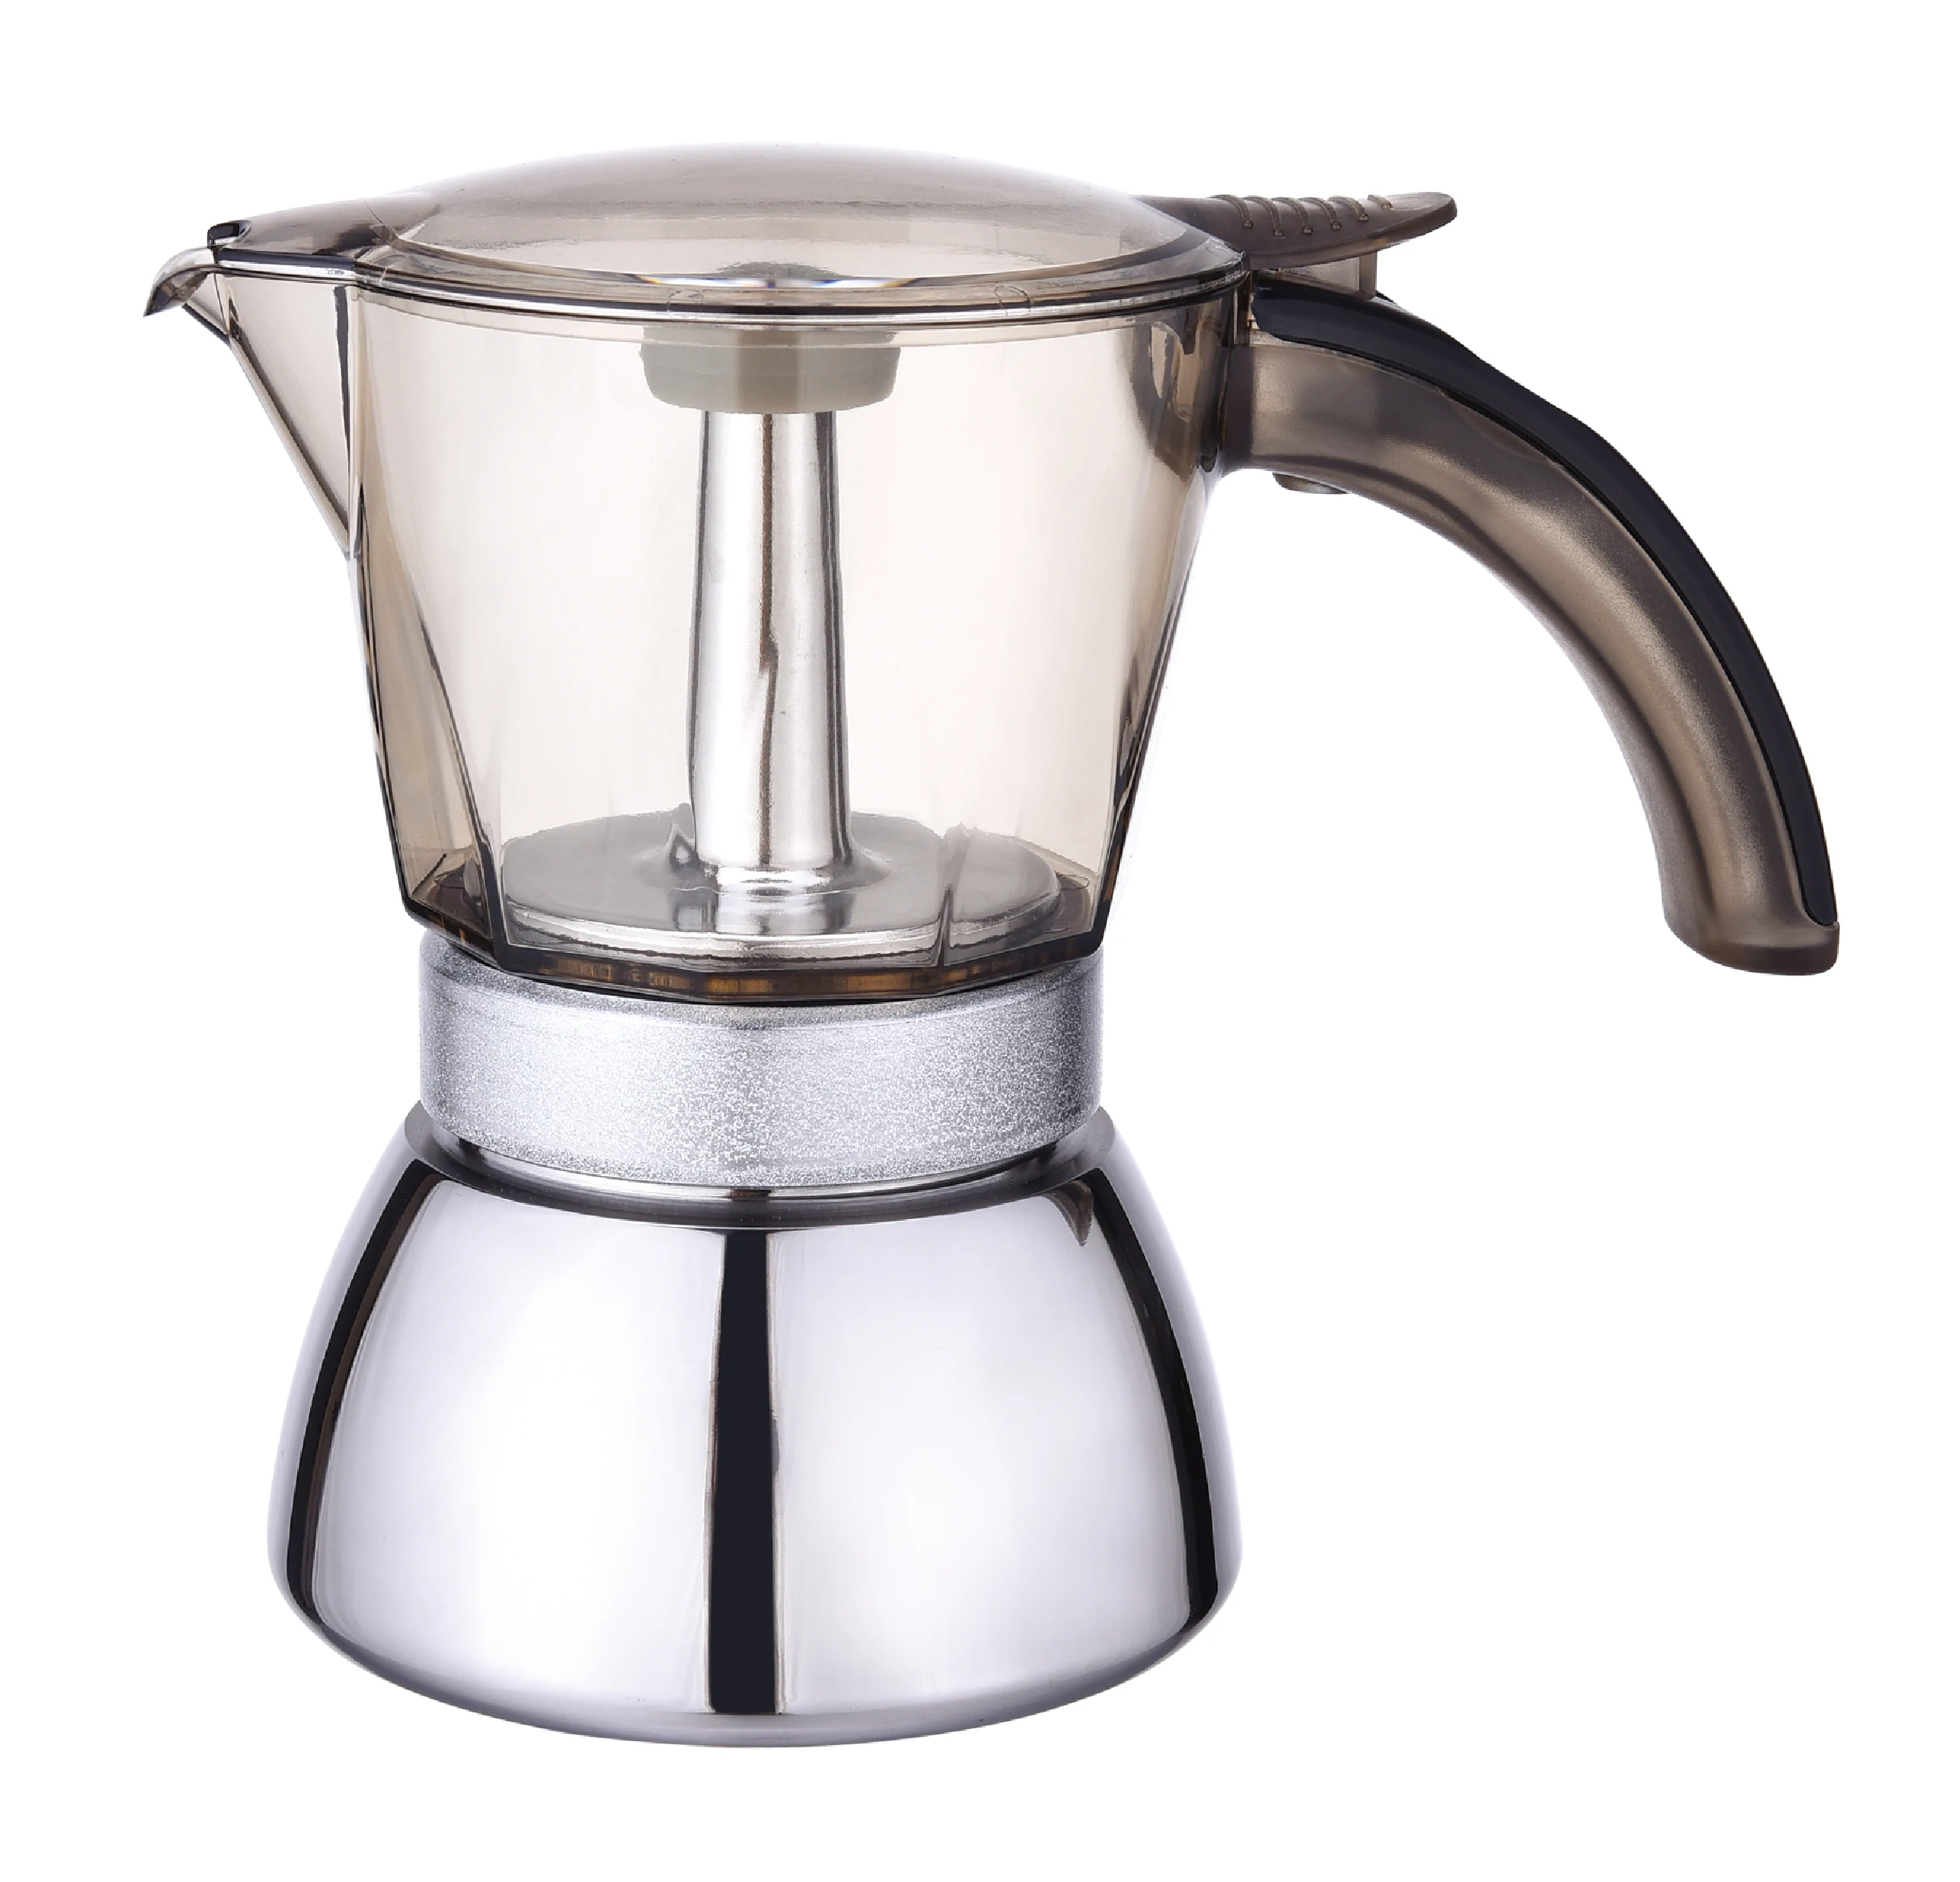 Premium Crystal Glass-Top Stovetop Espresso Moka Pot - 3 Cup Coffee Maker